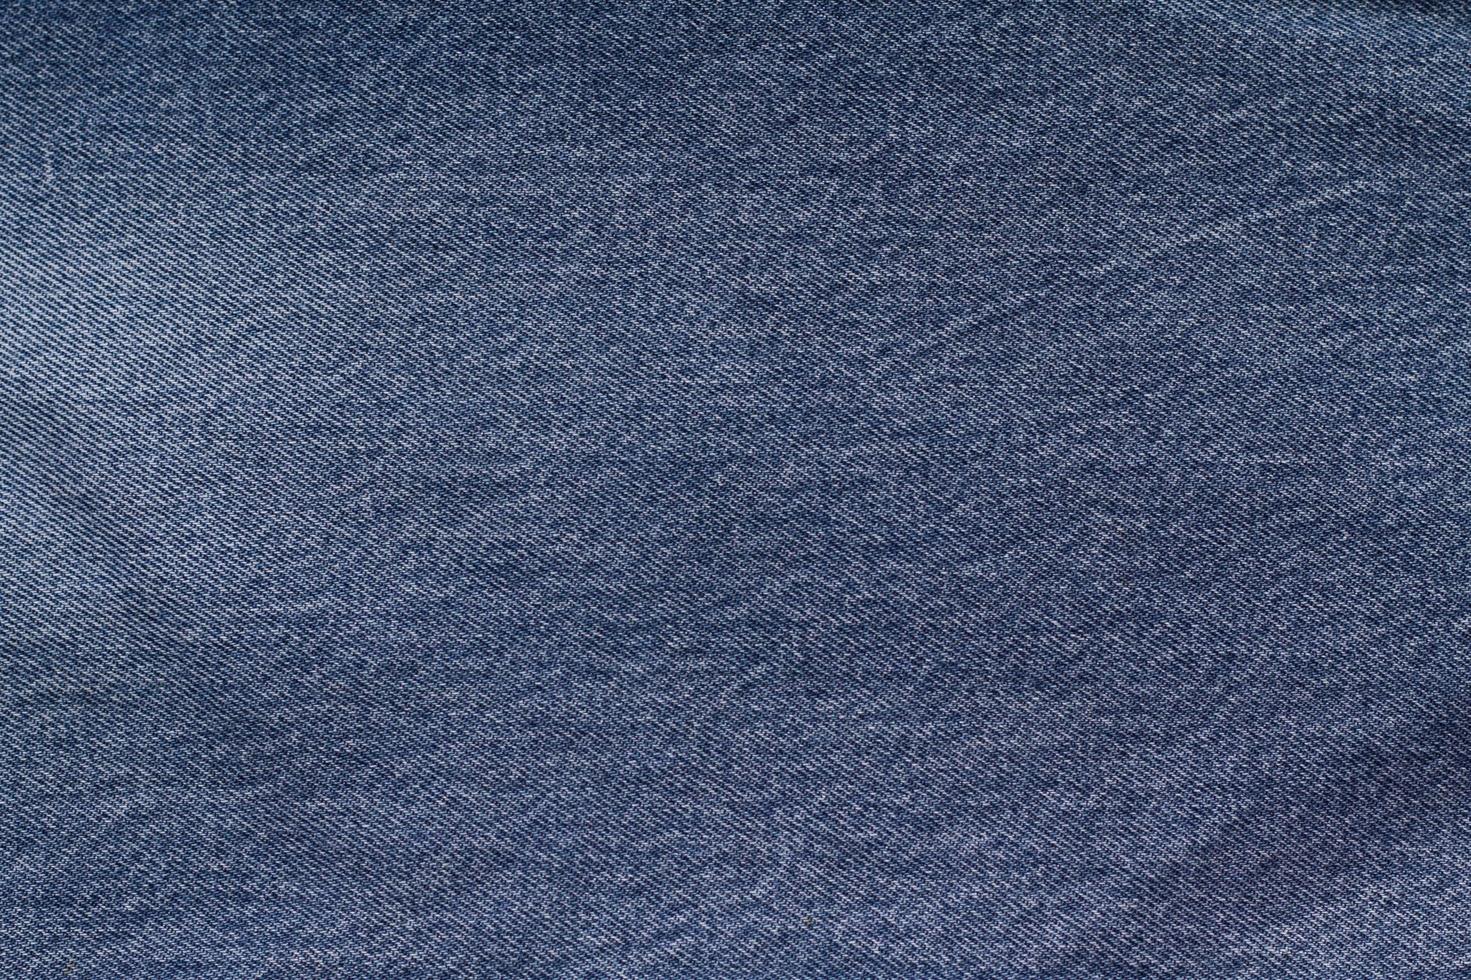 fundo de textura de jeans azul jeans foto